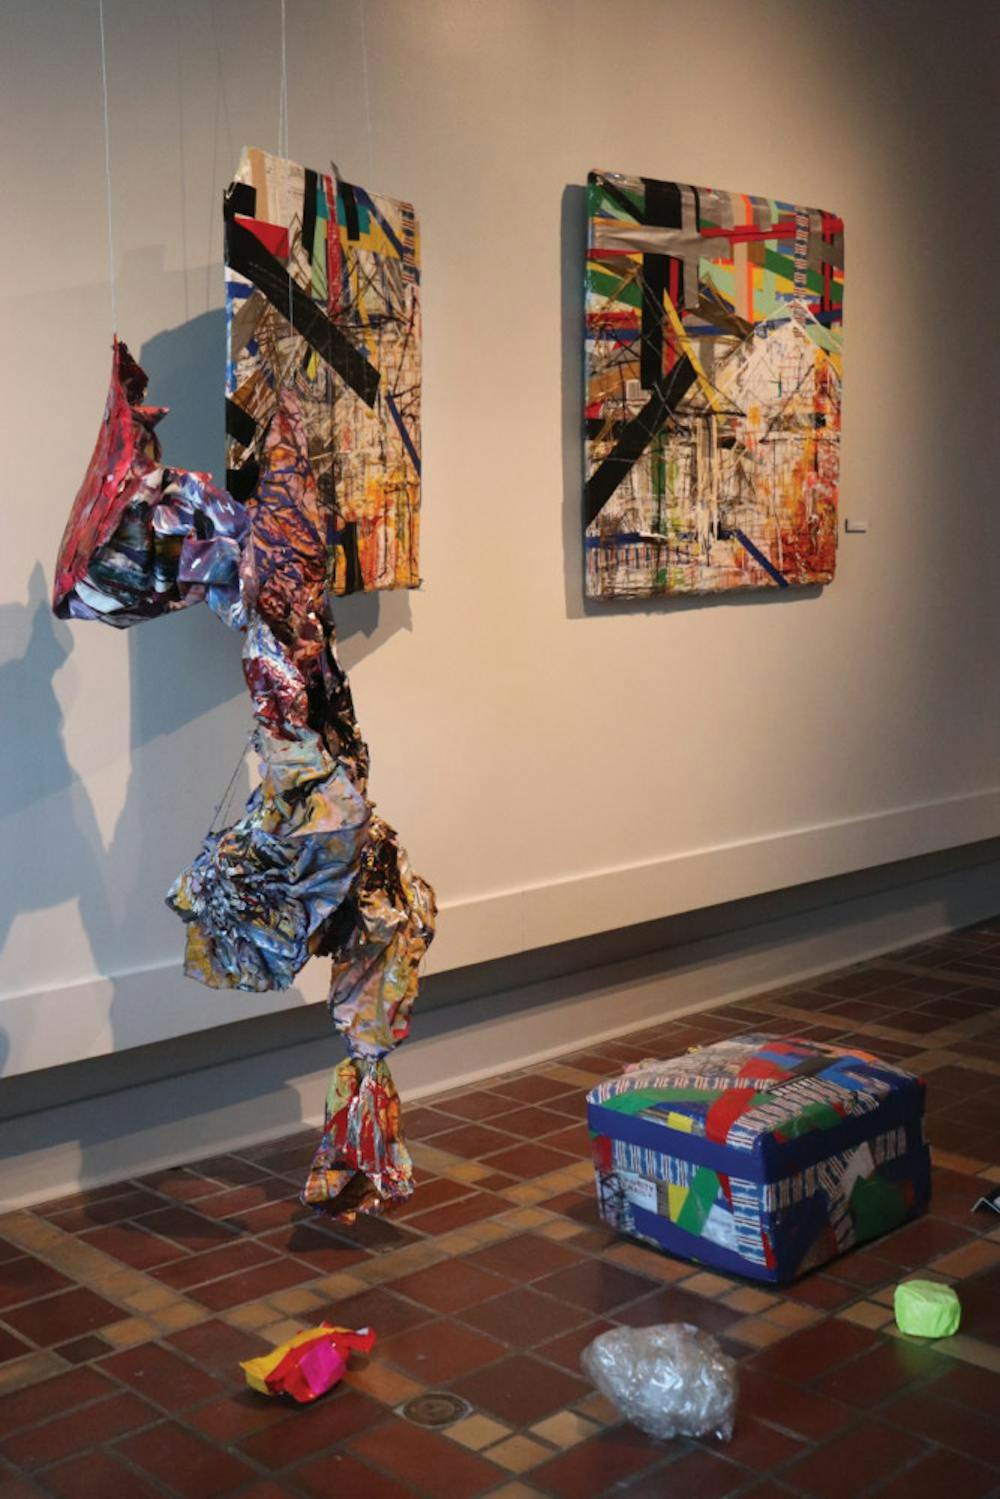 Jude Anogwih's art was on display at the McEachern Art Center in Macon, Ga. Jan. 23.